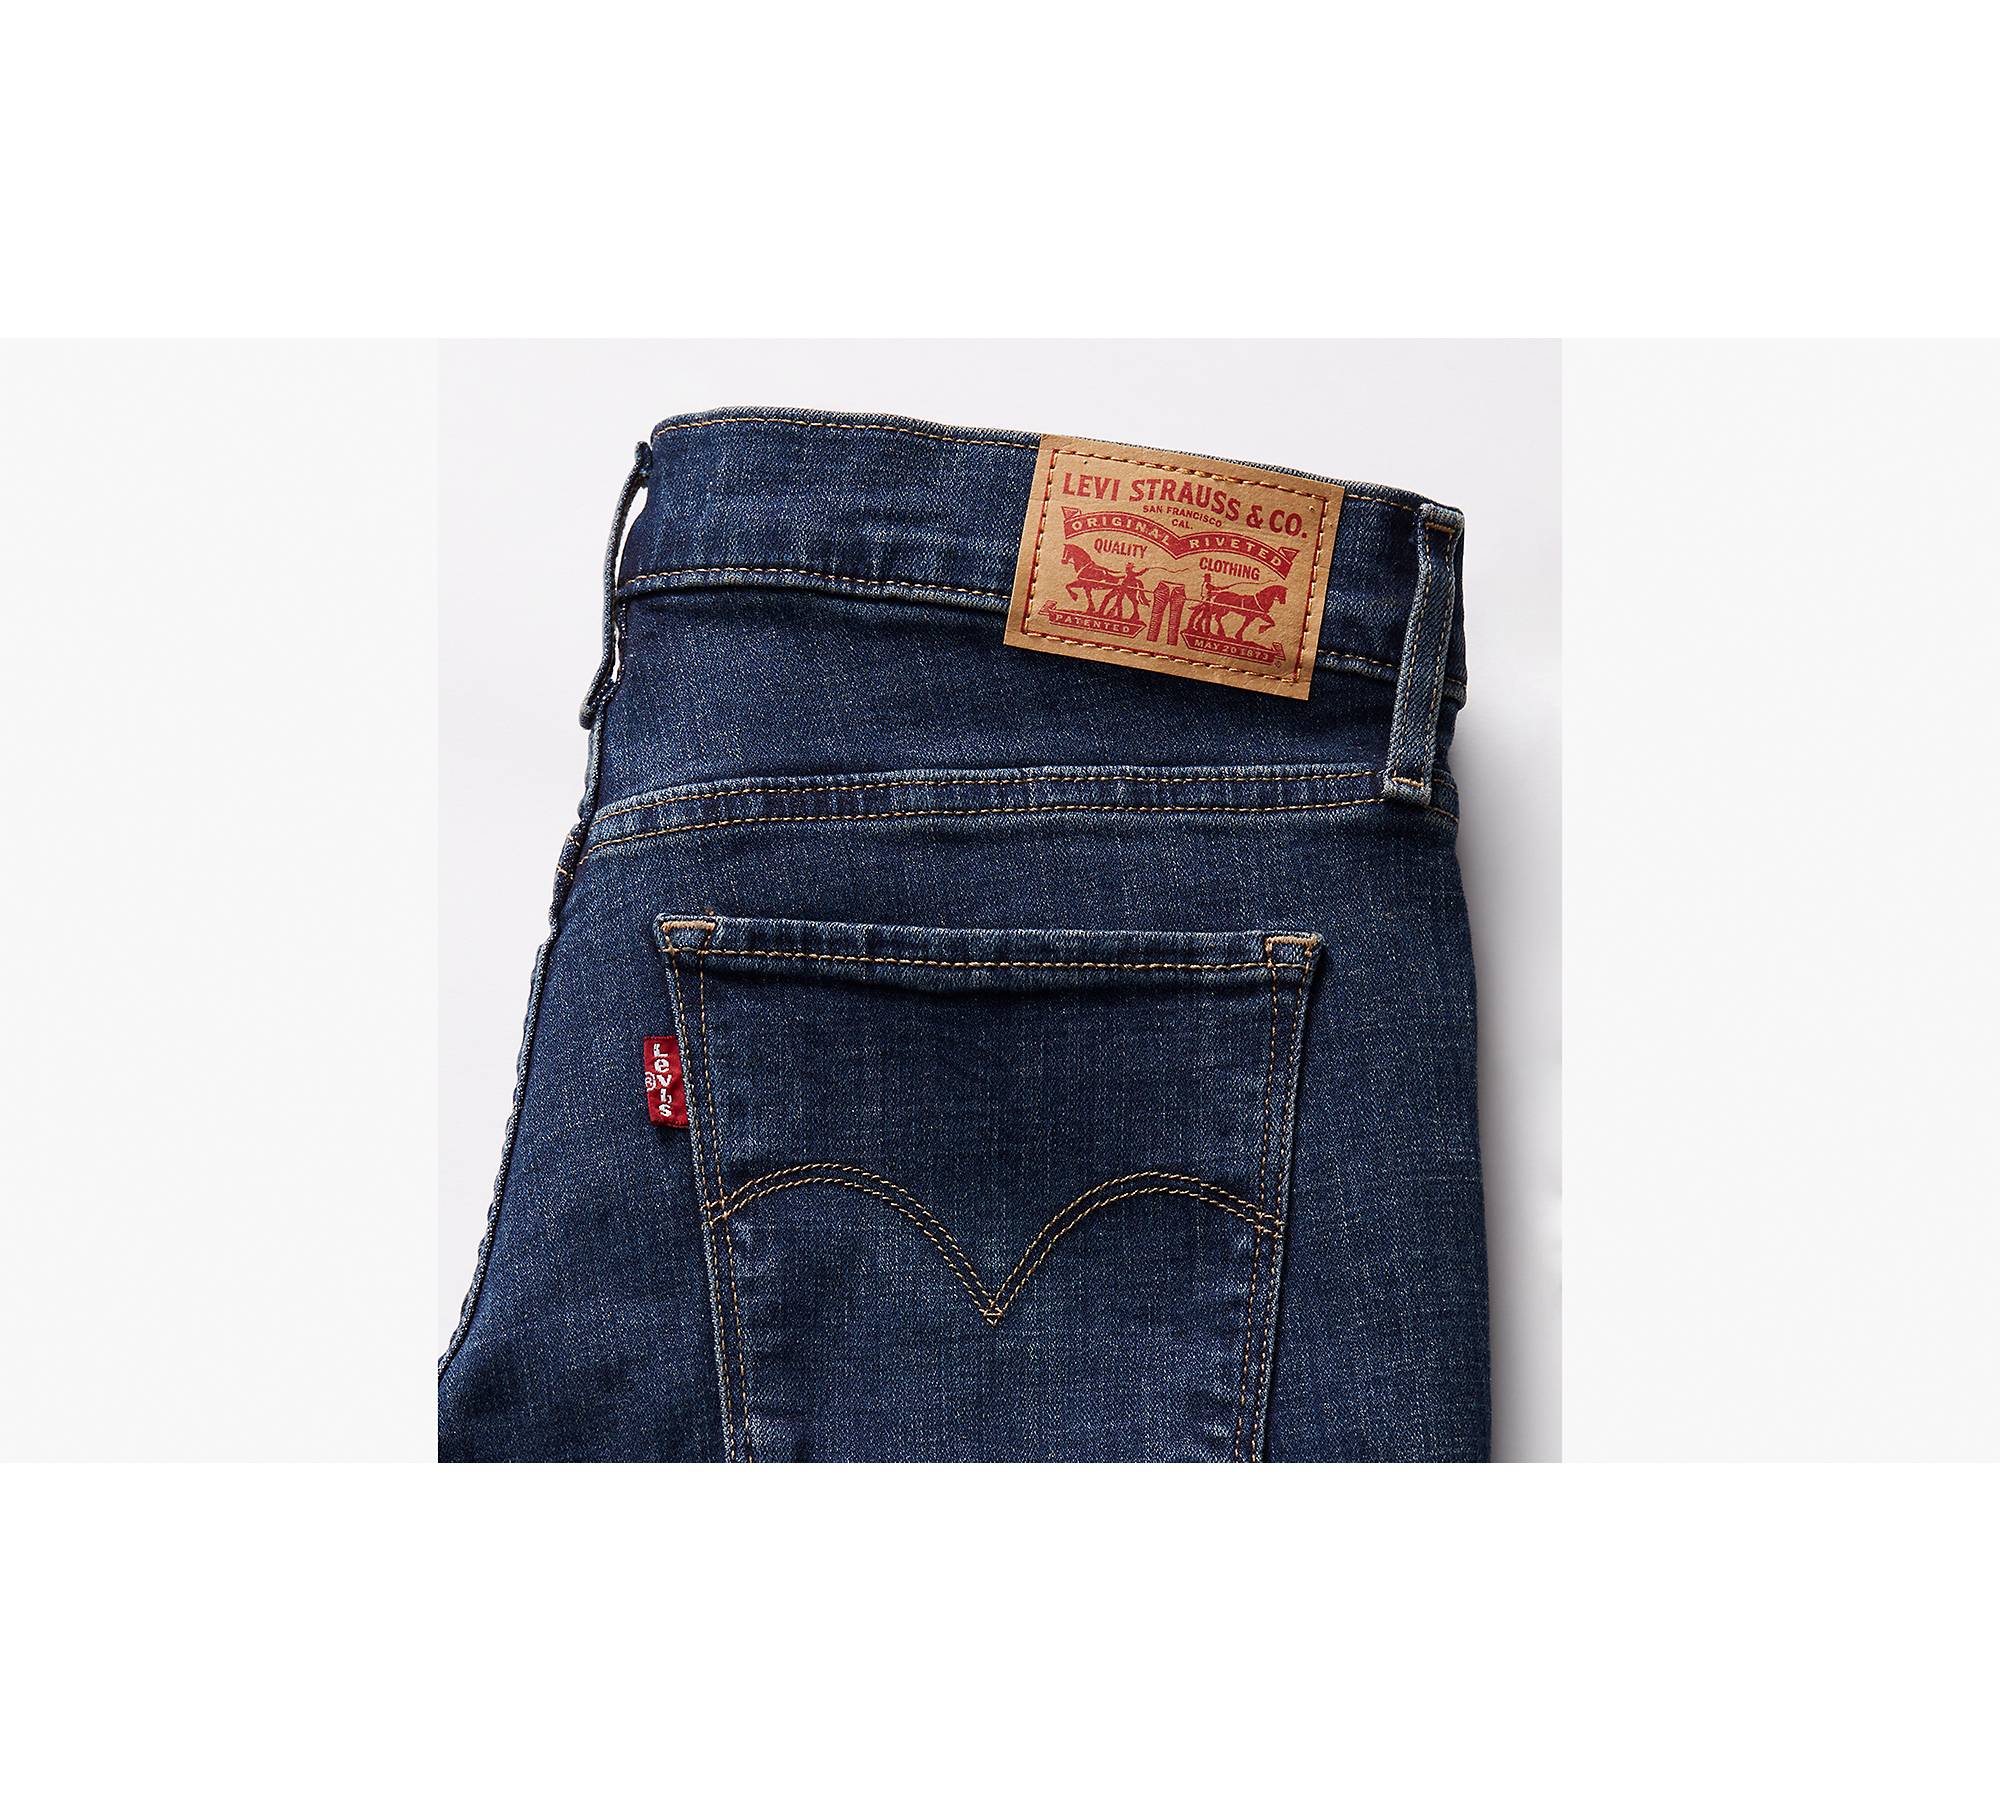 IT Authentic denim Tummy Tuck Jeans -Brand New W/Tags sz 16